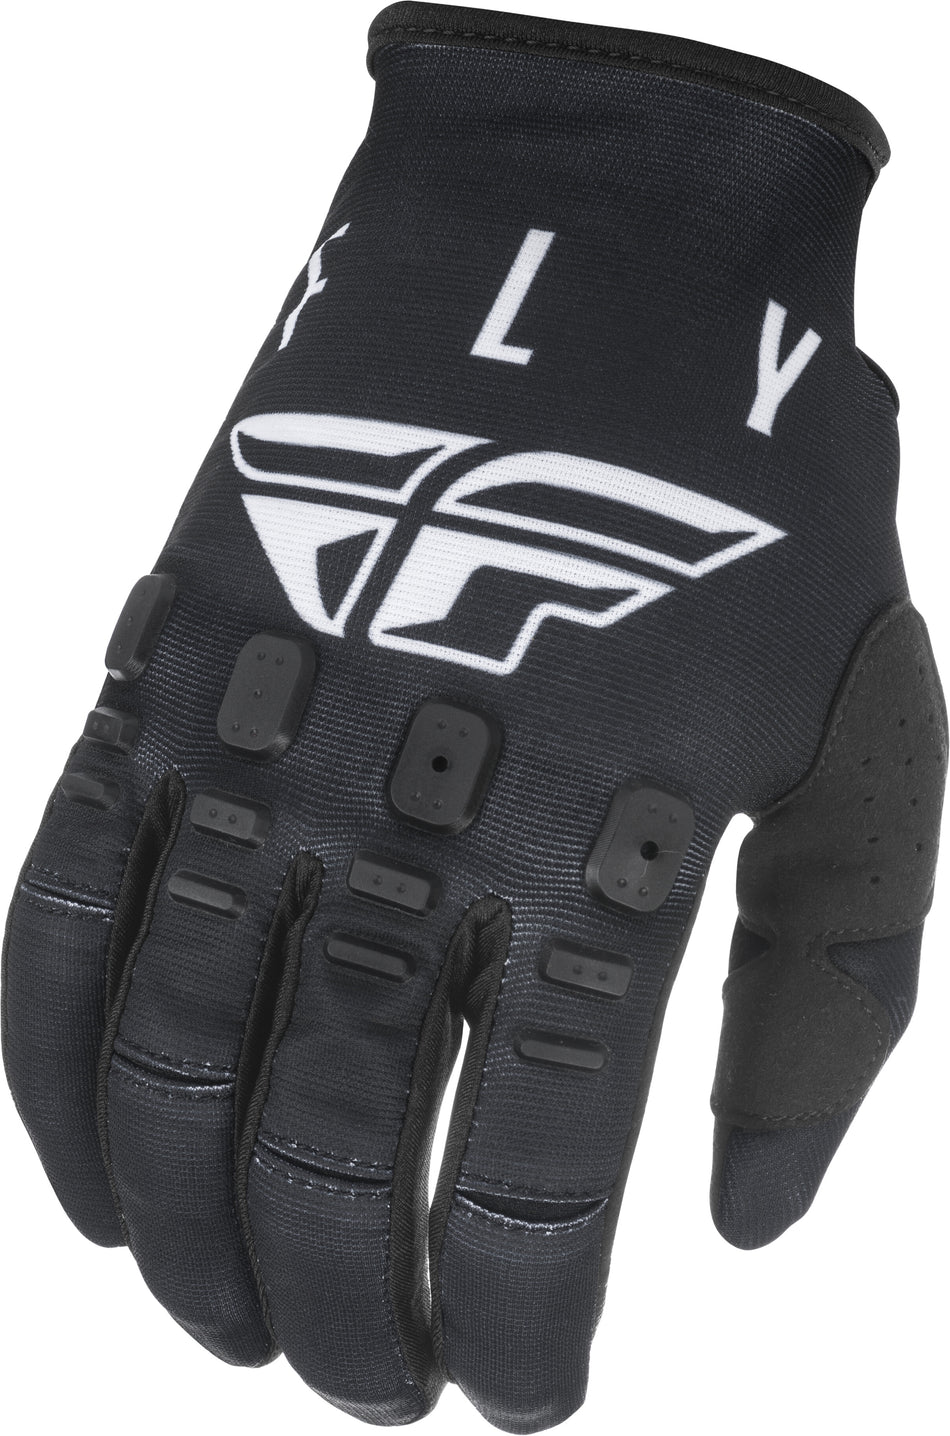 FLY RACING Kinetic K121 Gloves Black/White Sz 08 374-41008